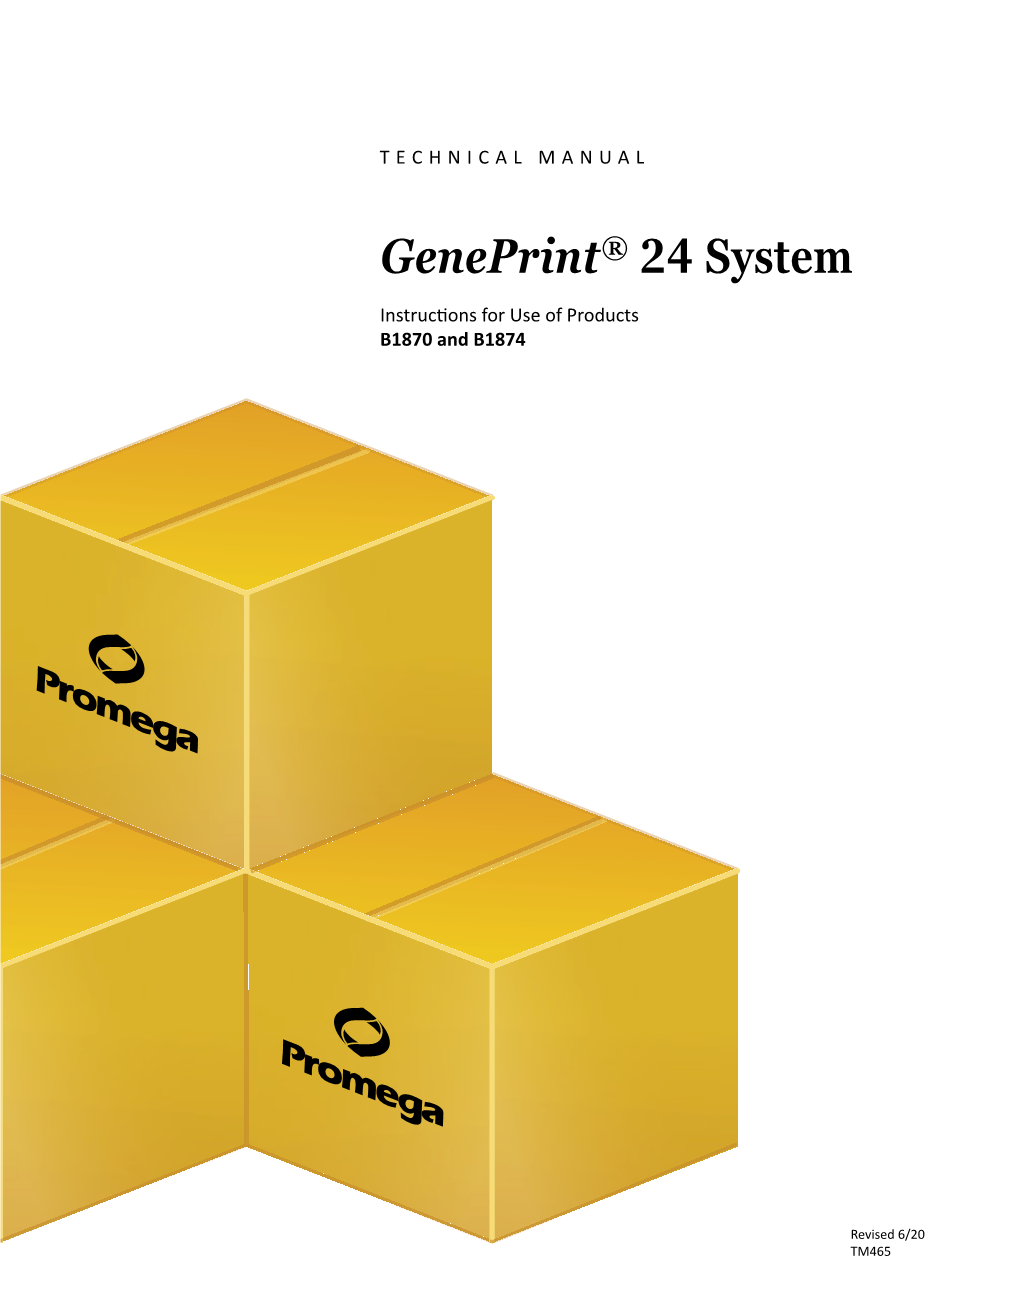 Geneprint® 24 System Technical Manual #TM465